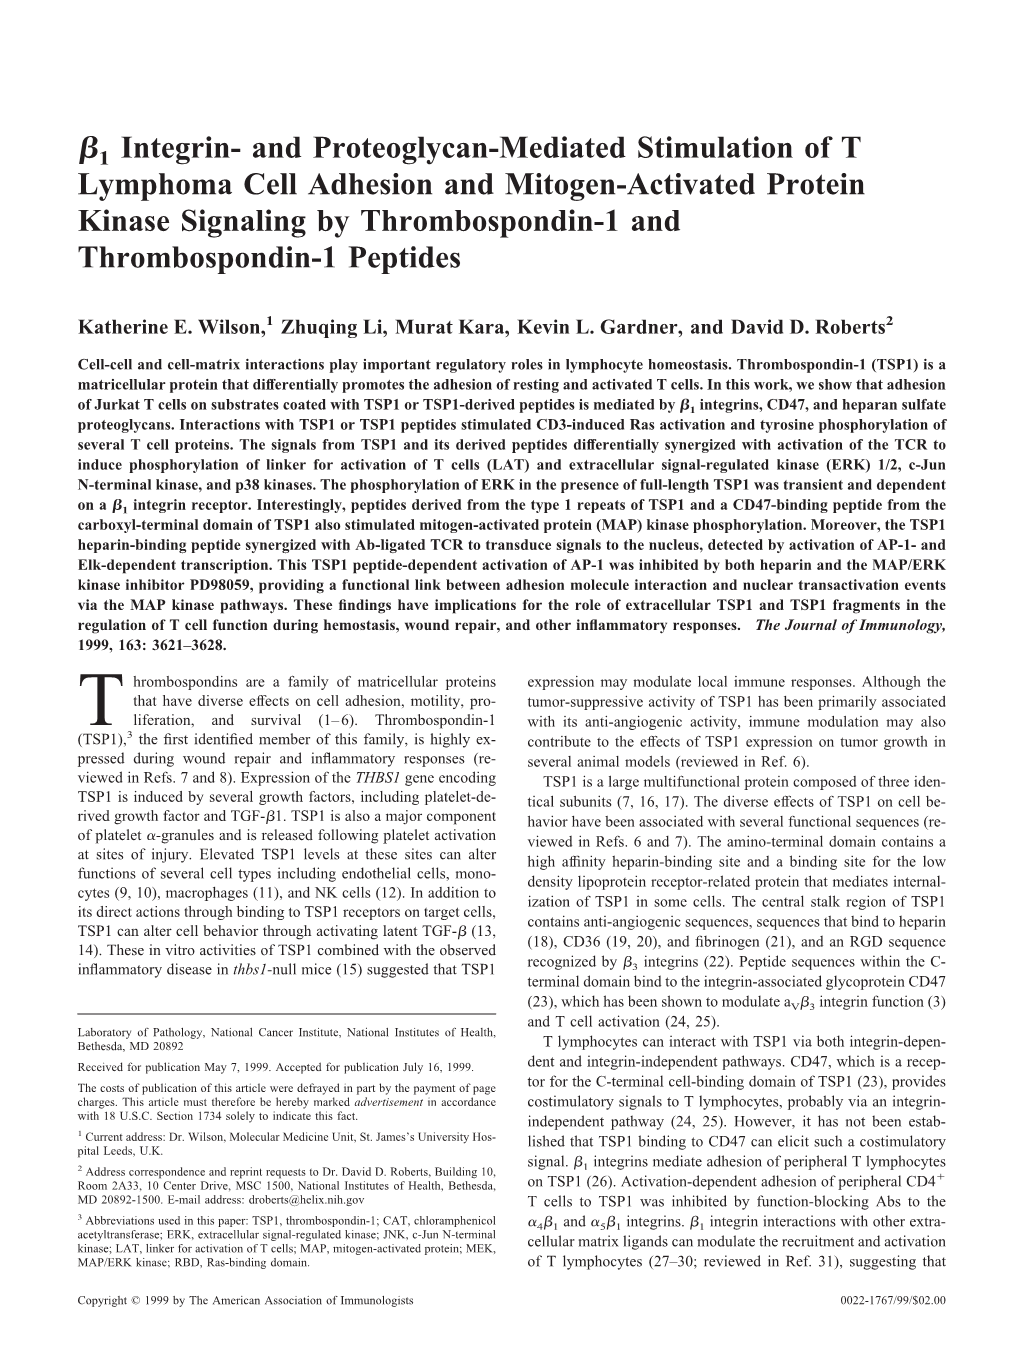 Thrombospondin-1 Peptides Signaling by Thrombospondin-1